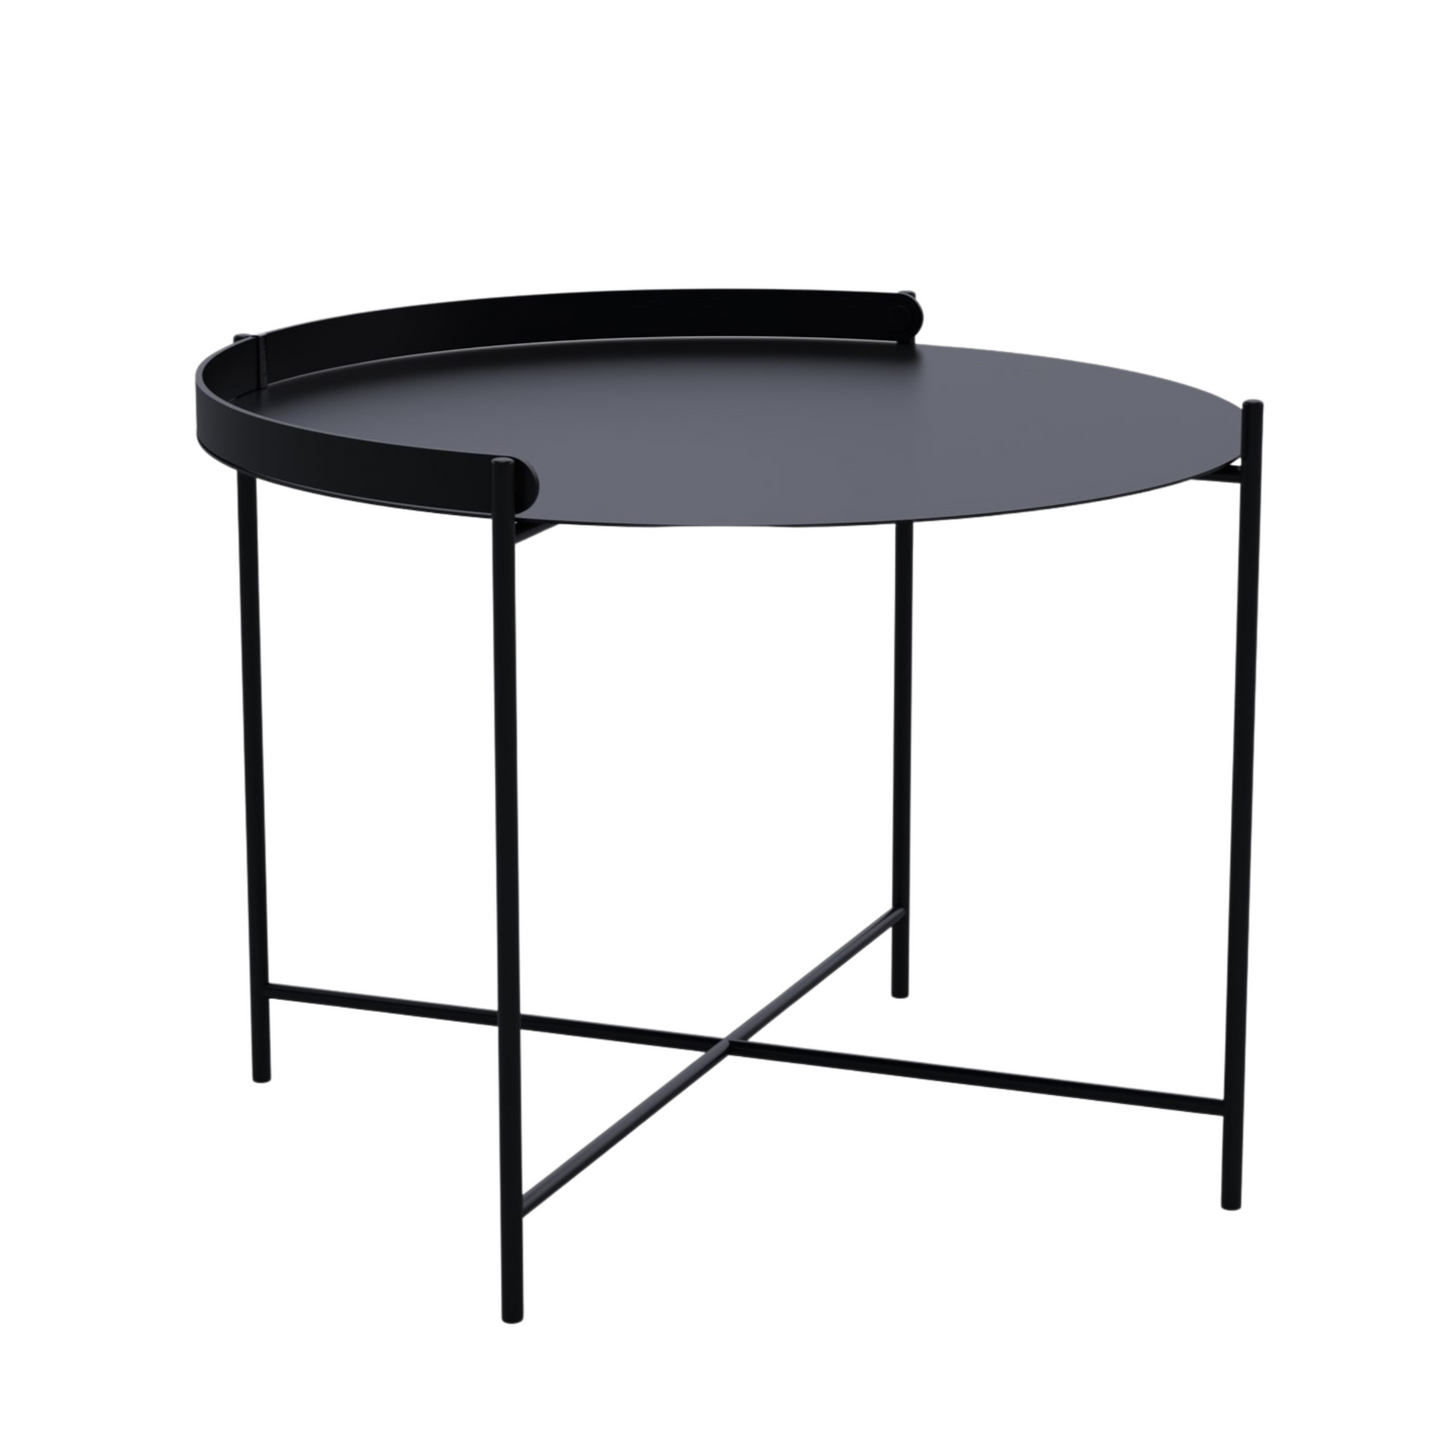 Edge Tray Table - Black Medium